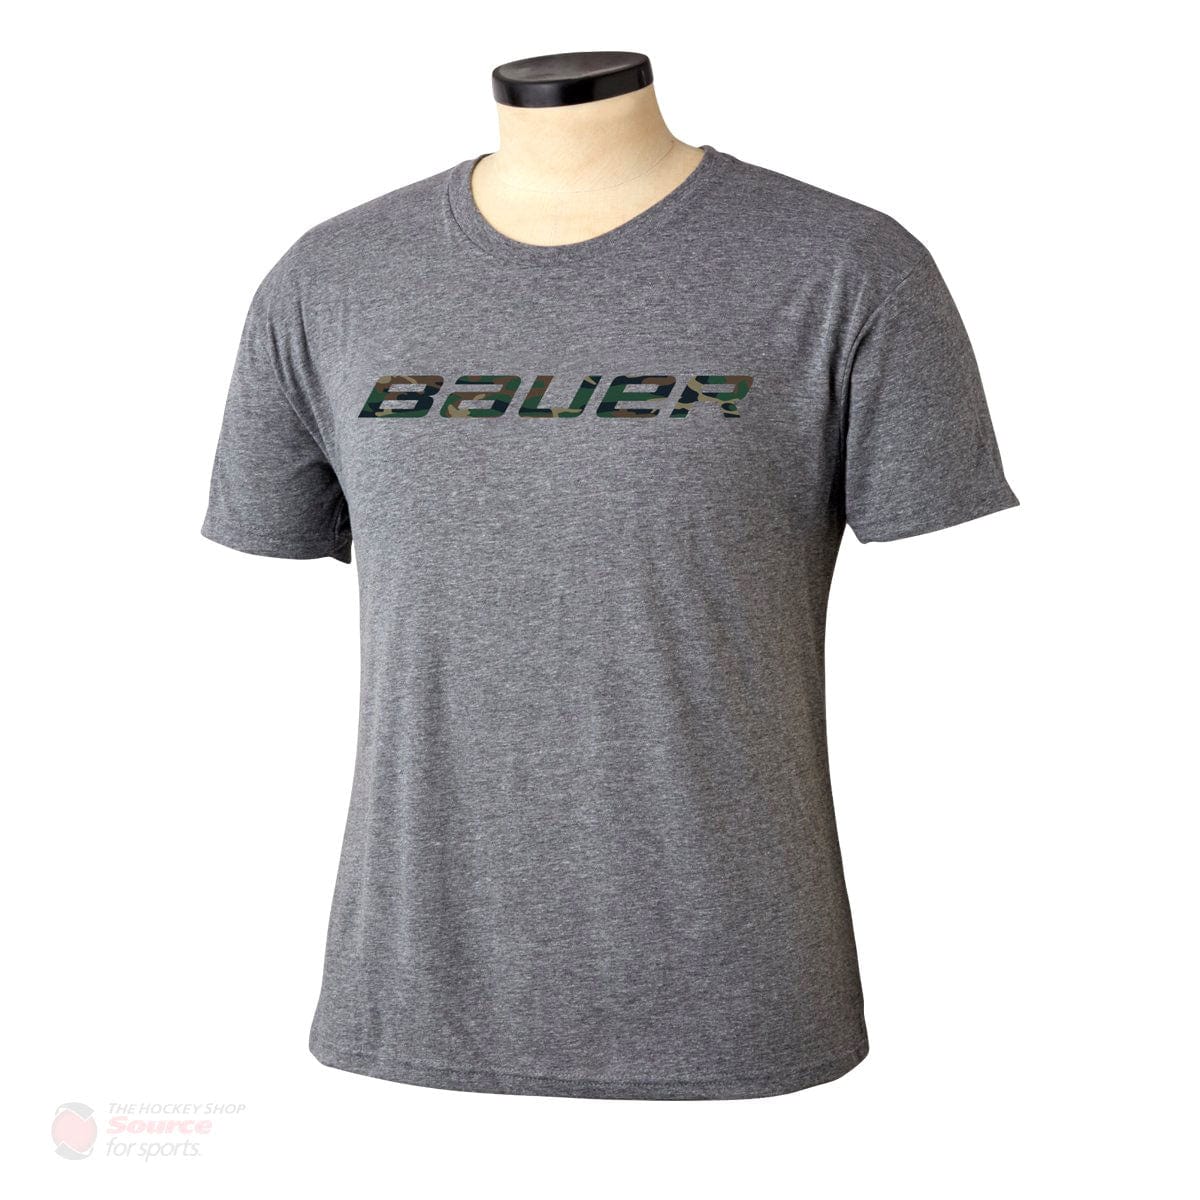 Bauer Camo Shortsleeve Men's Shirt